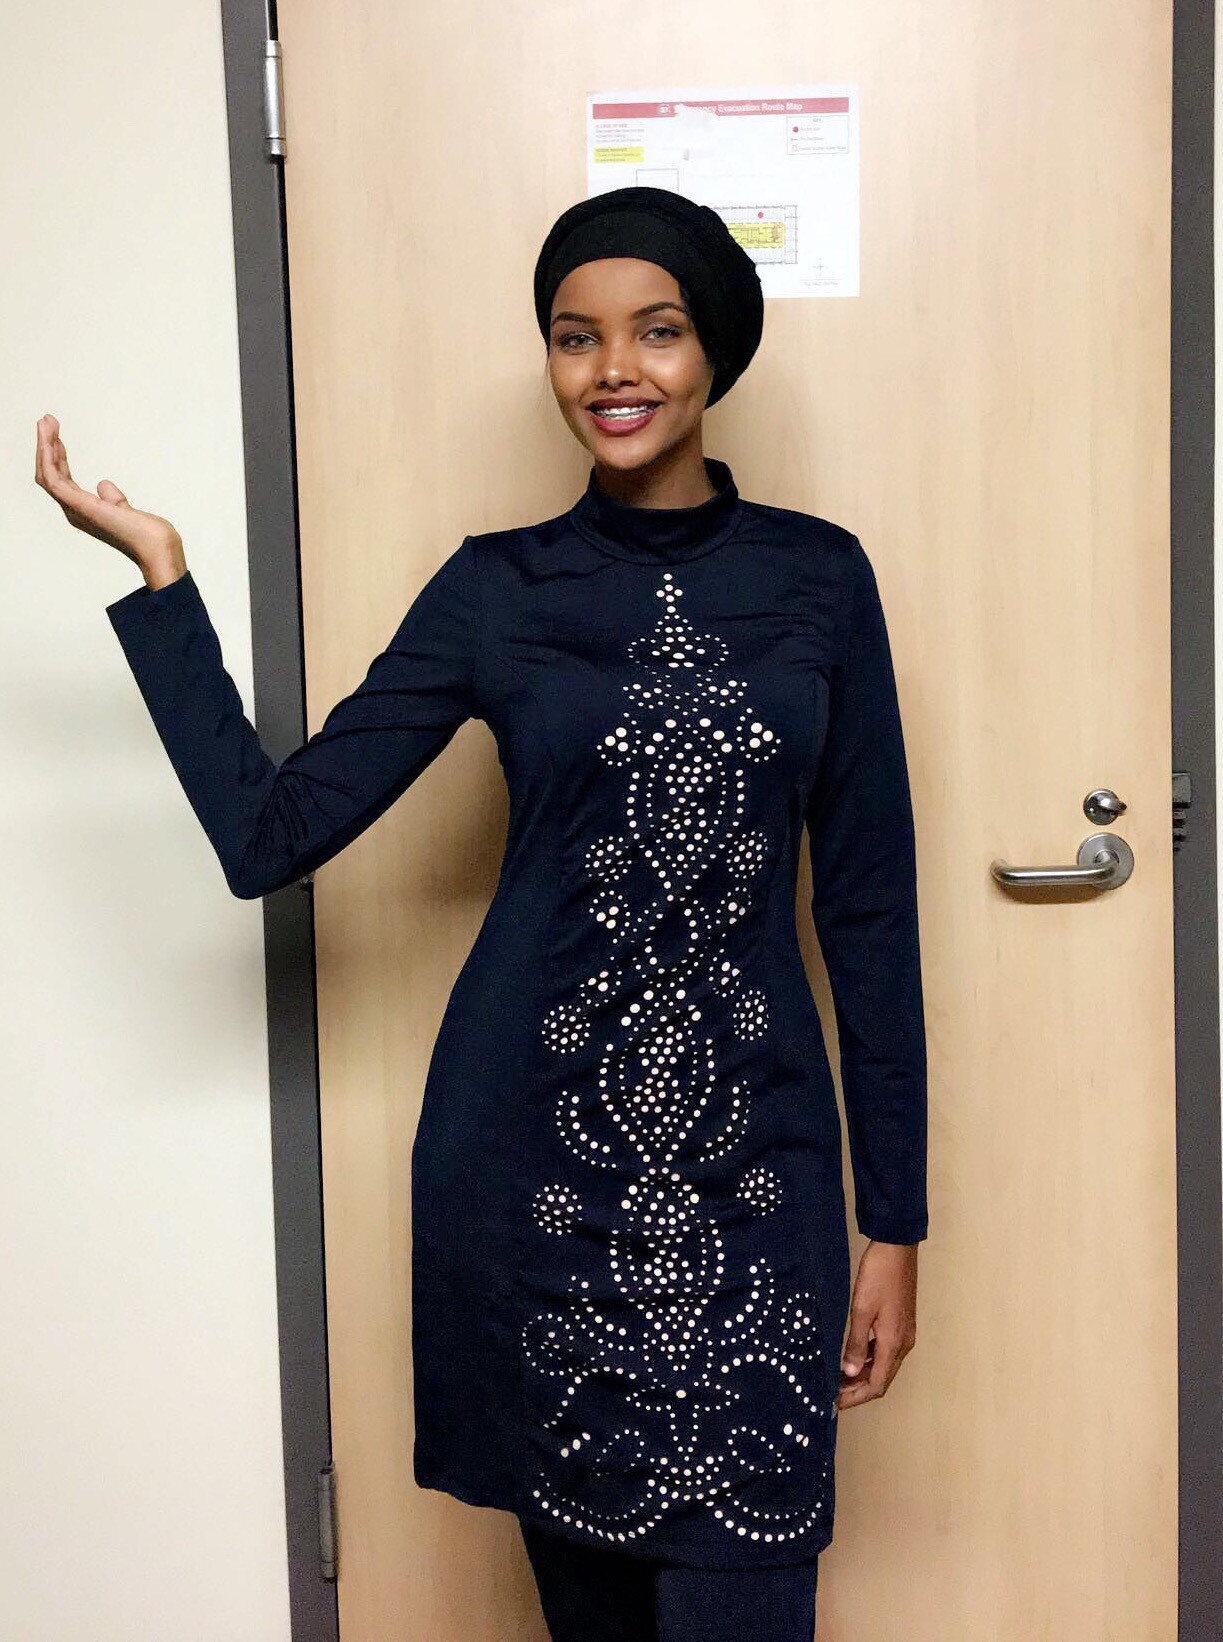 Miss Minnesota USA Muslim Contestant